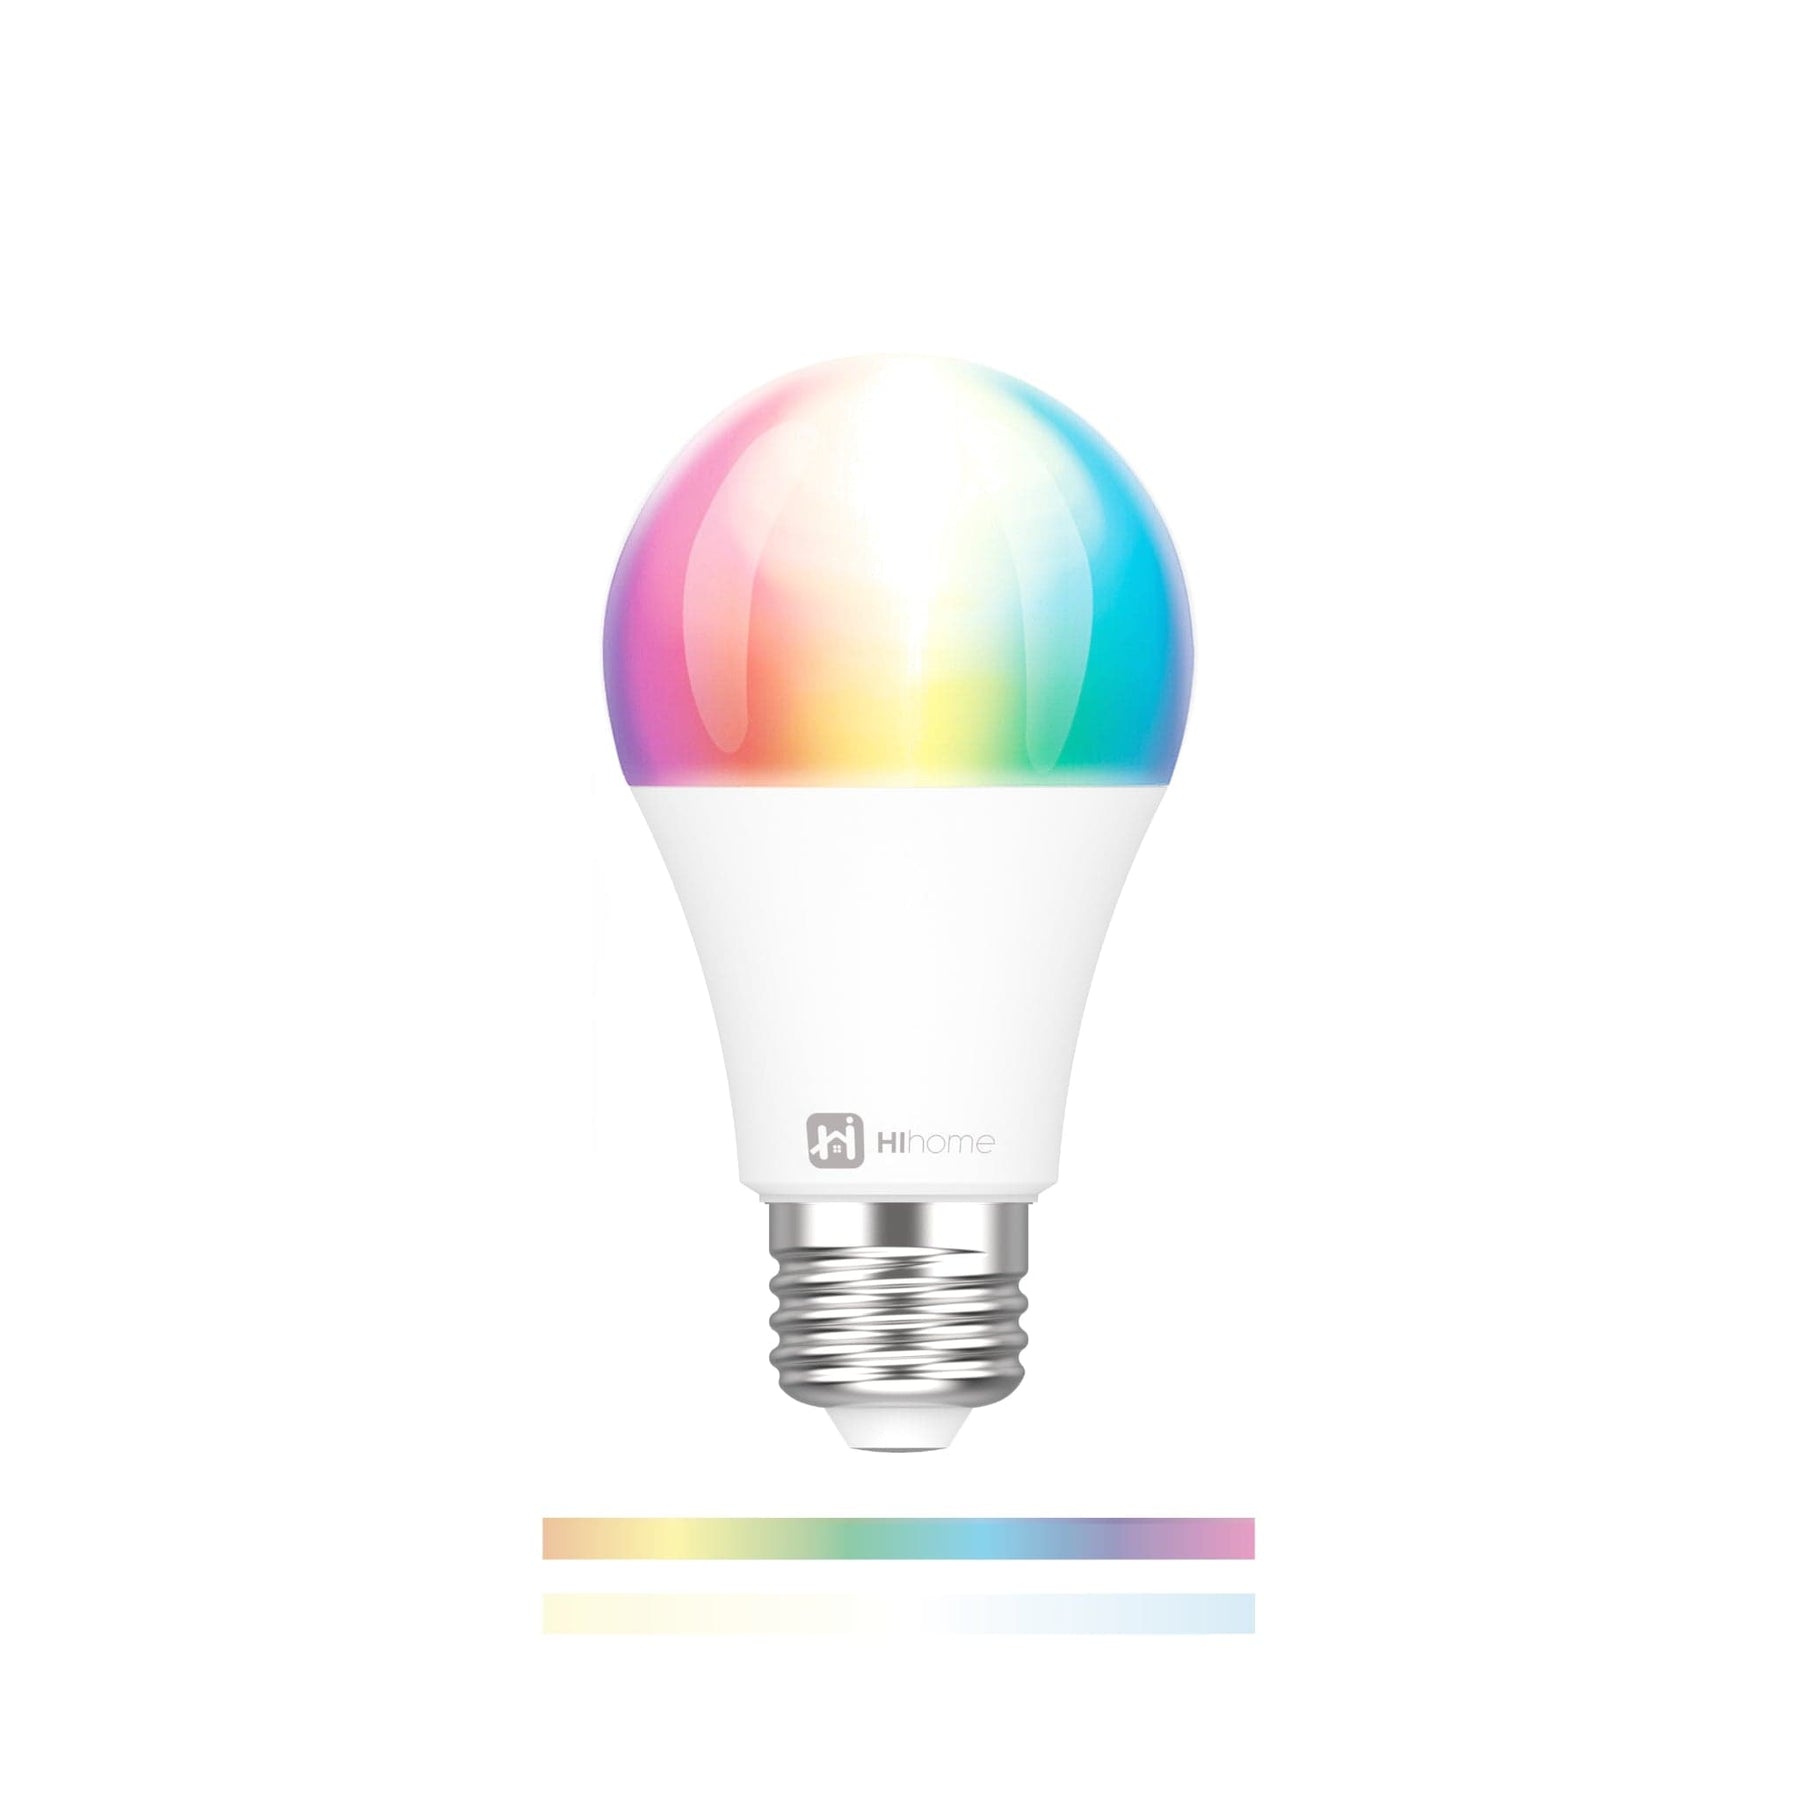 3-pack Hihome LED WiFi-Lamp 16M RGB colors + Warm white 2700K ~ Cool white 6500K